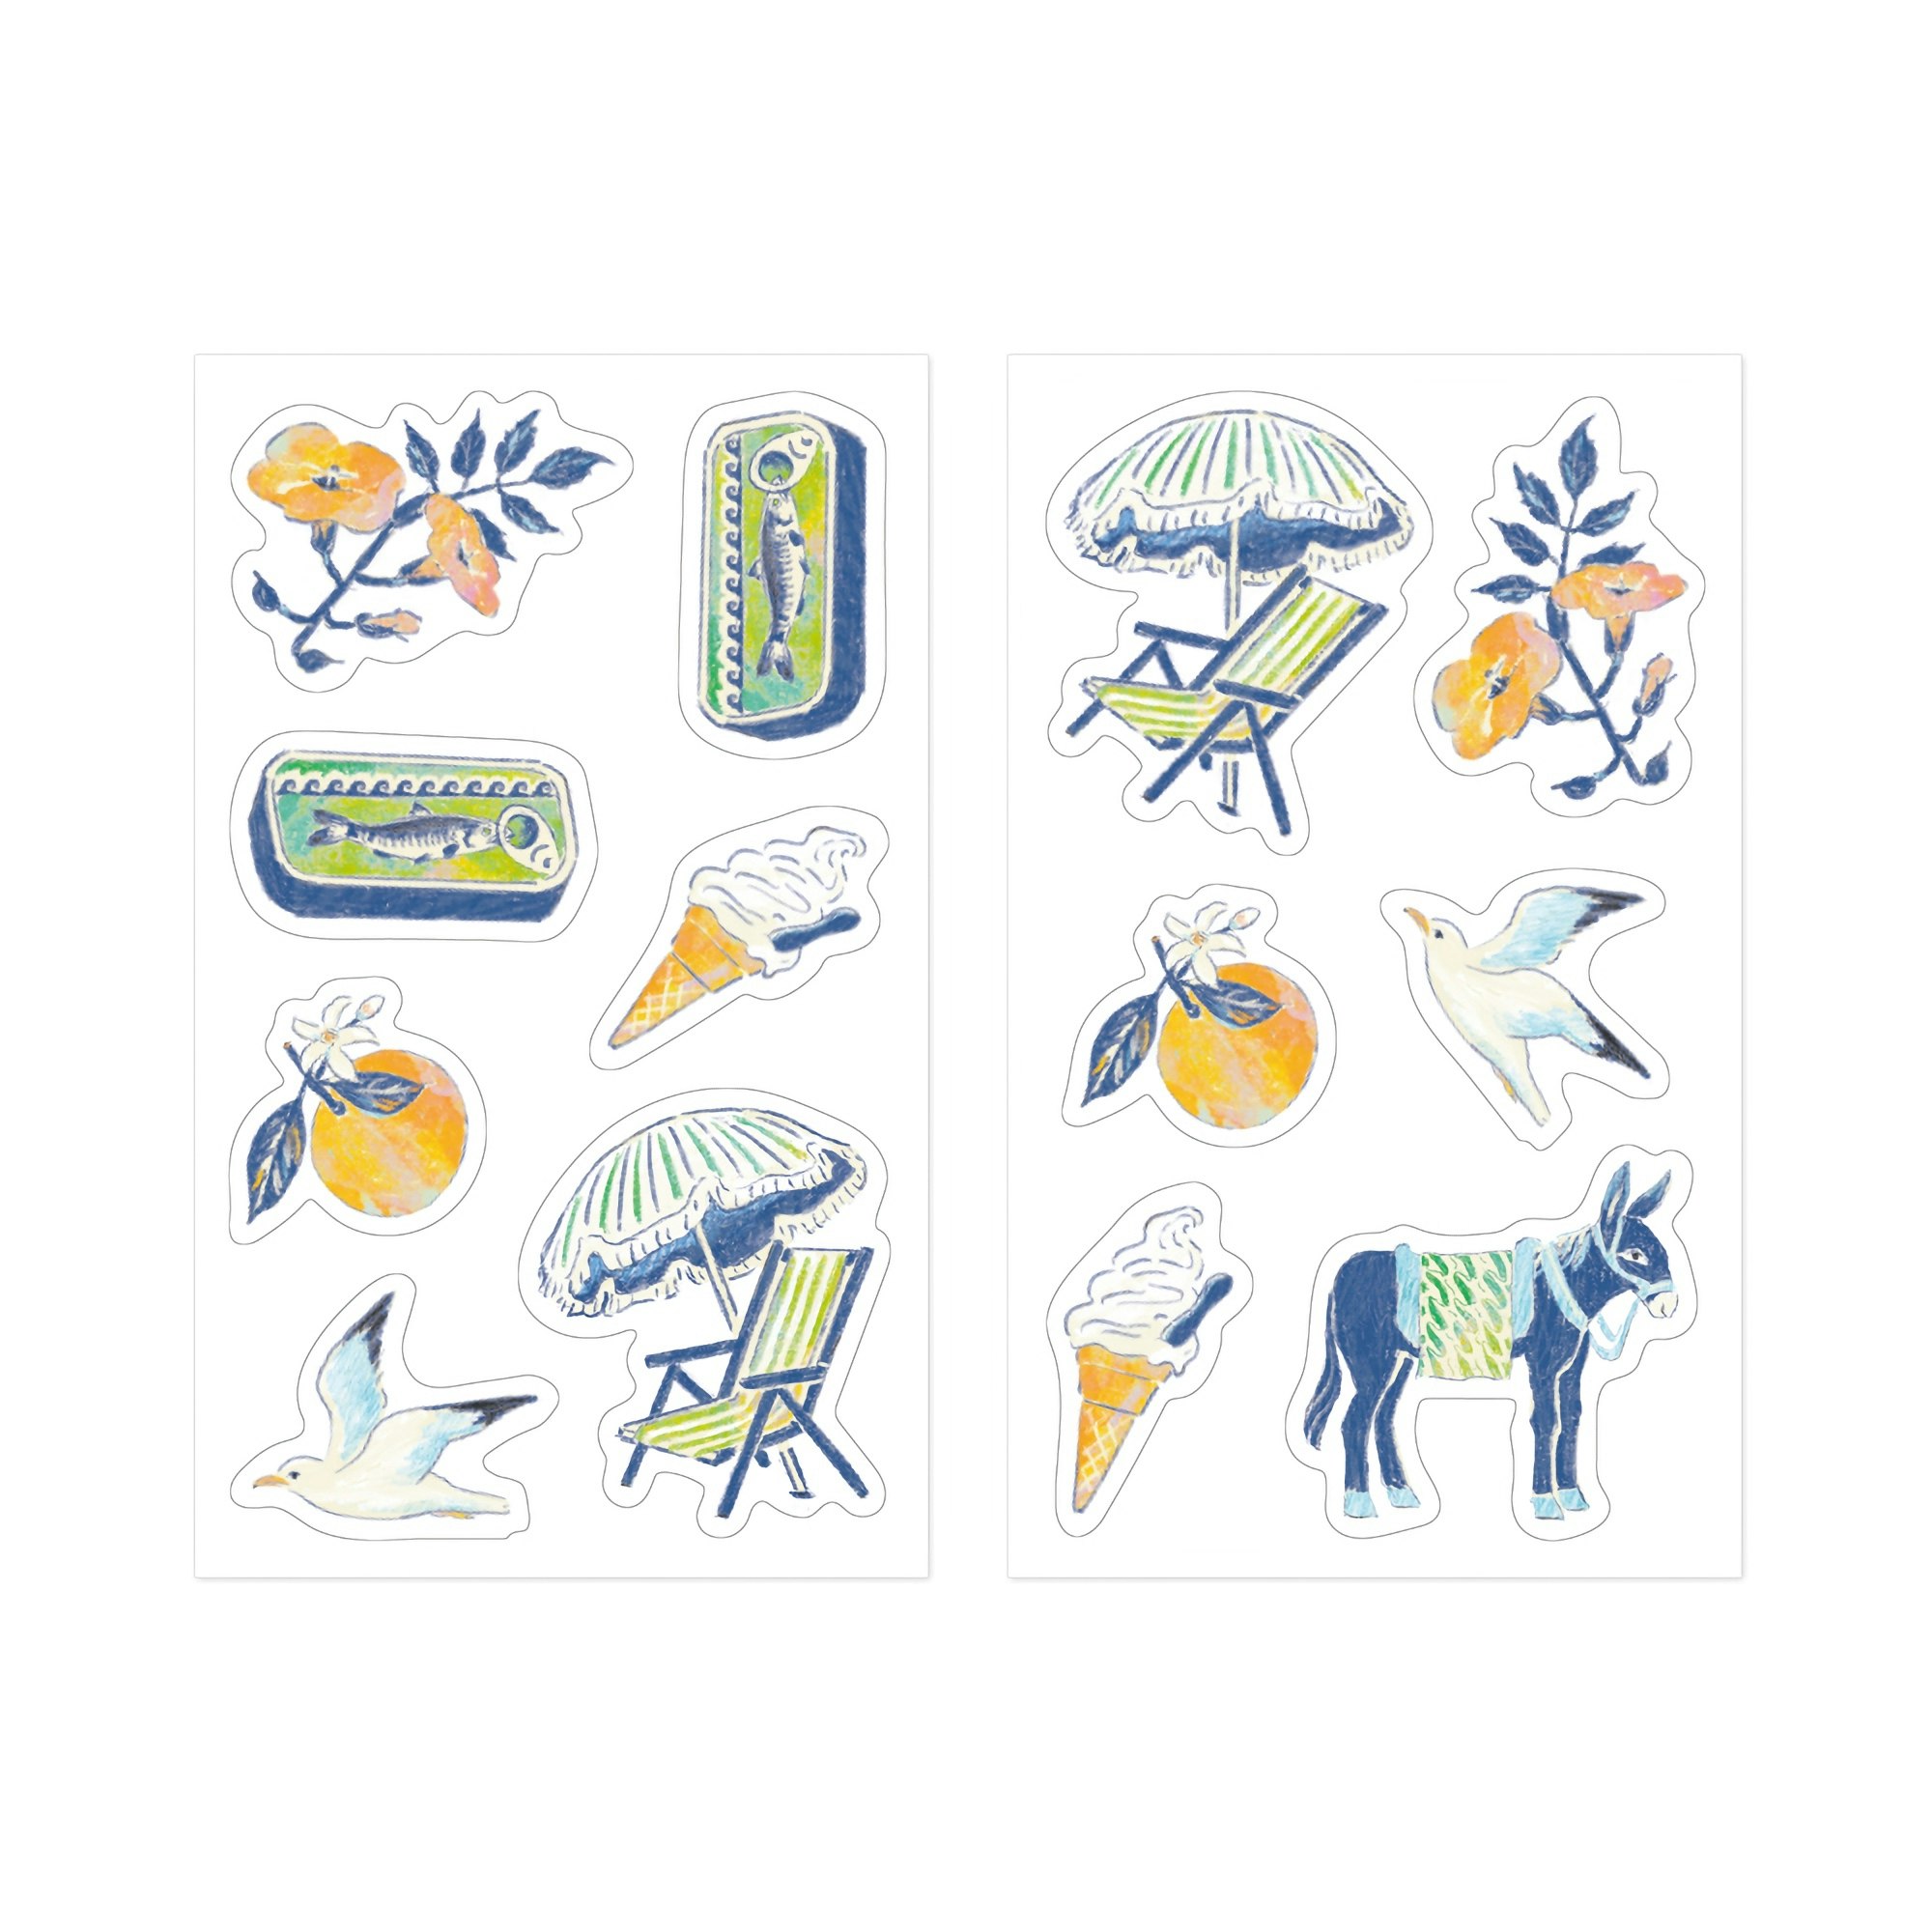 Midori Decoration Sticker Blue